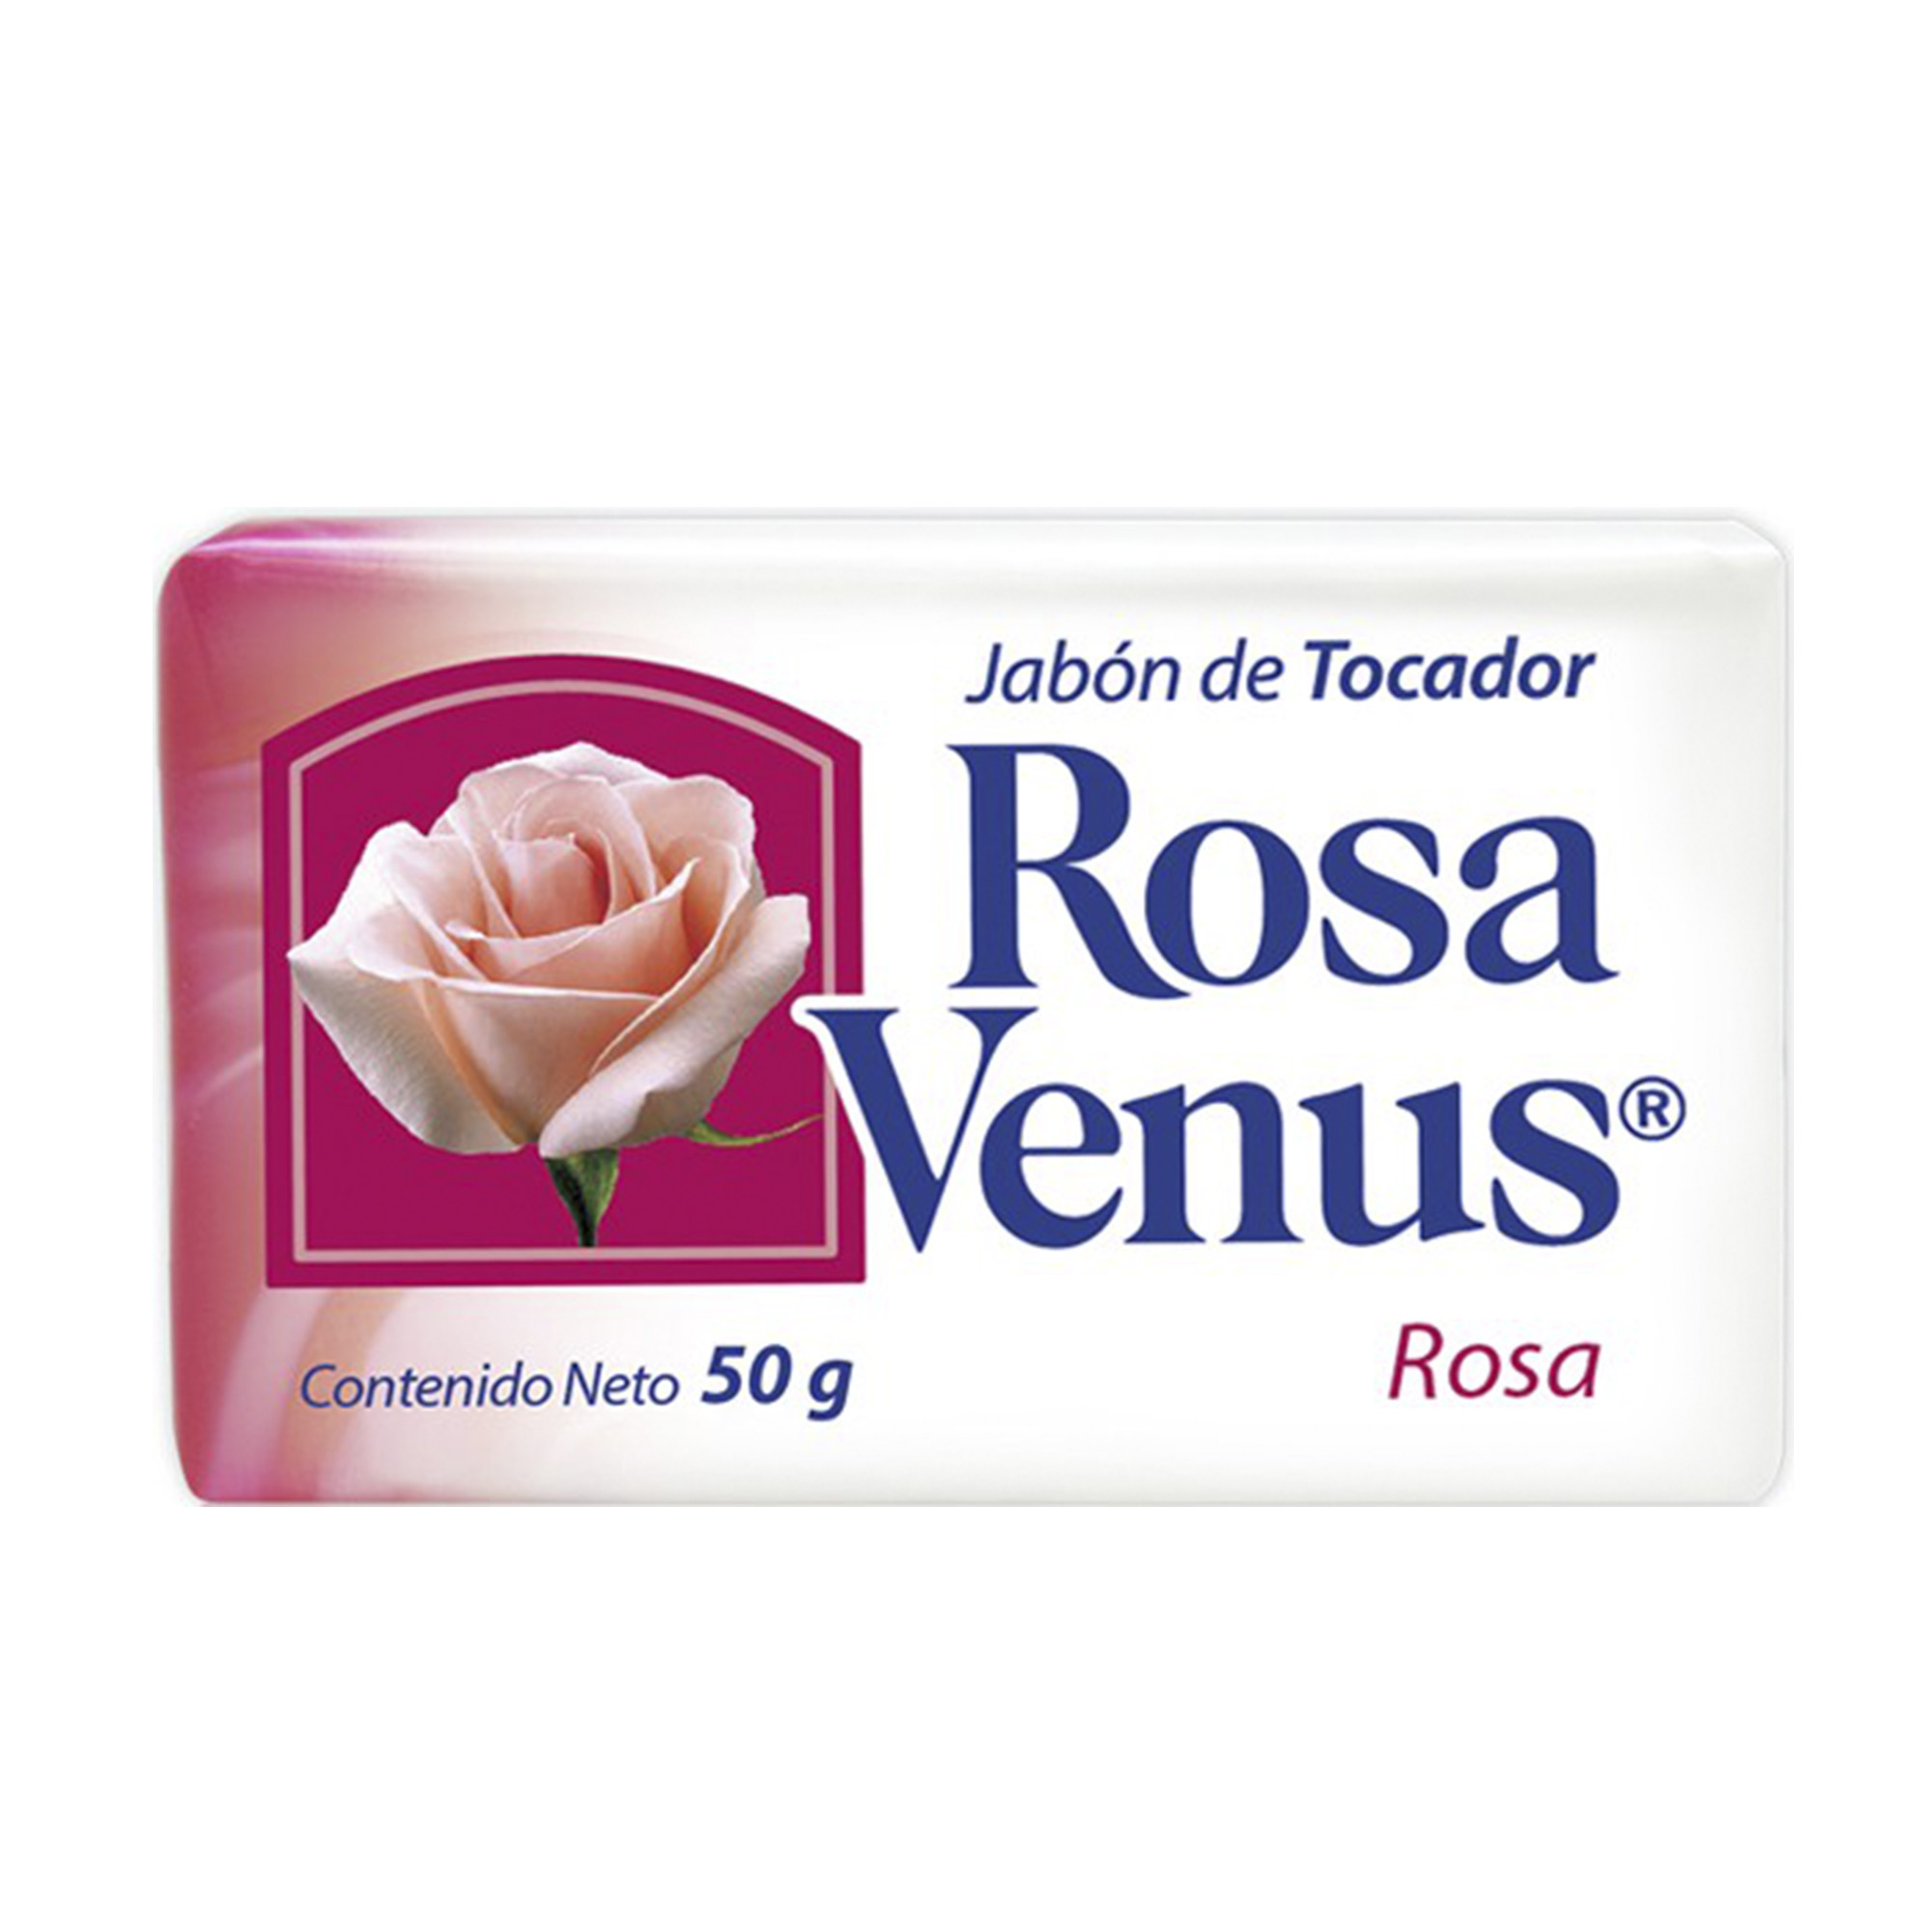 Jabón ROSA VENUS de 50 g